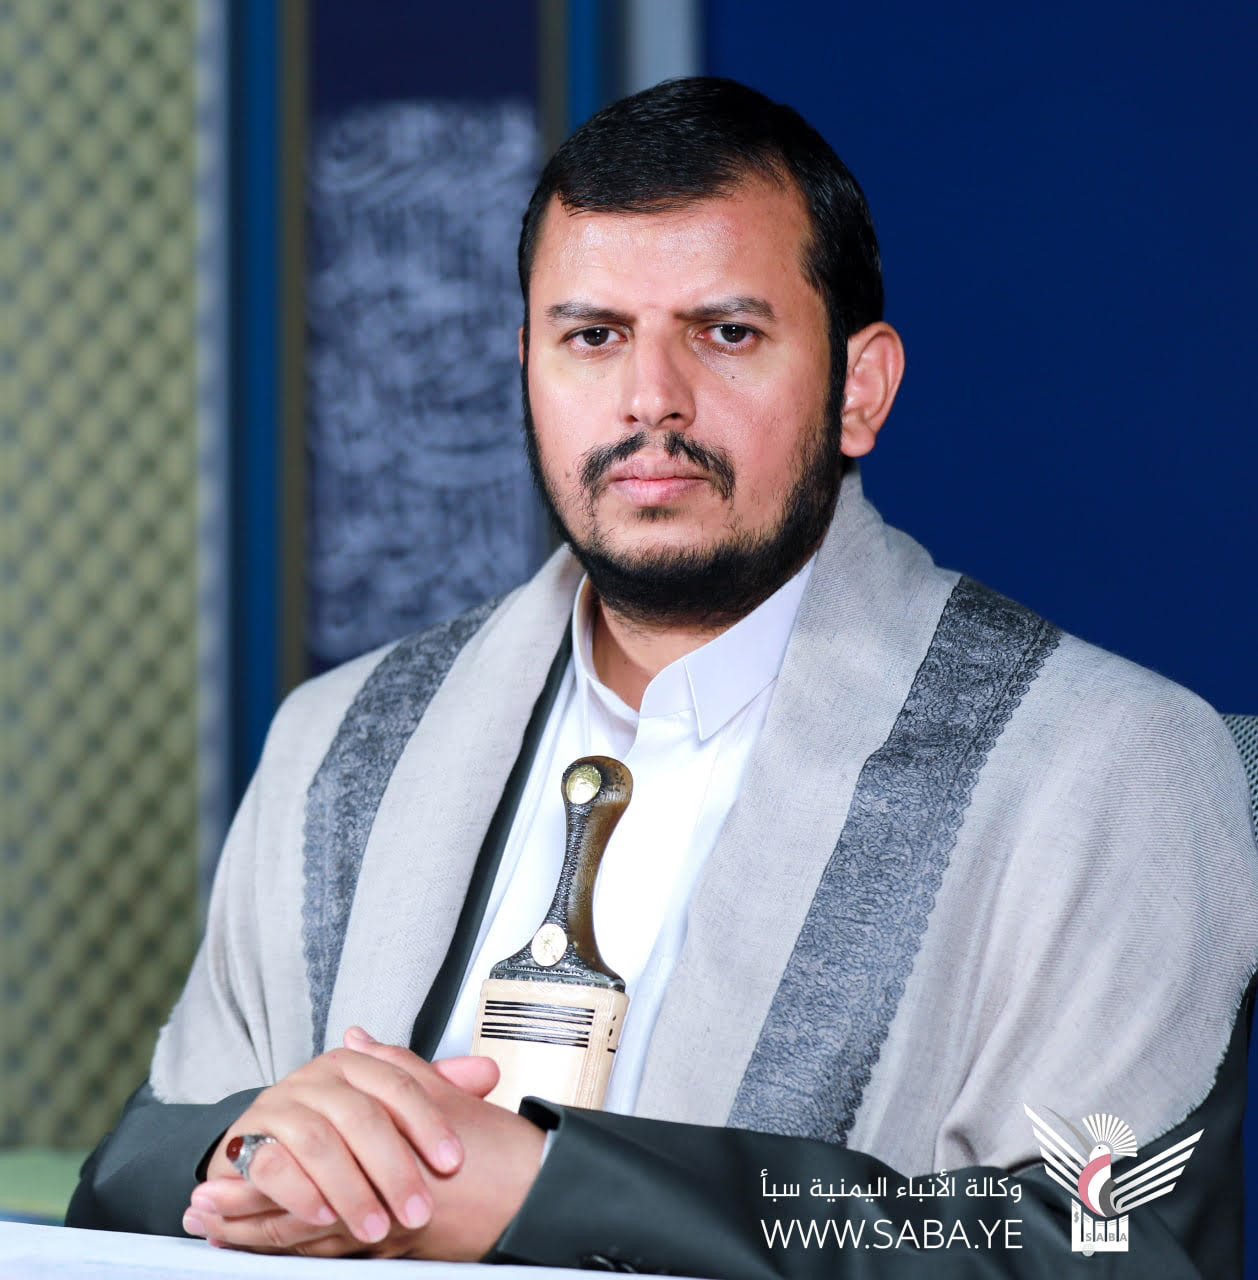 Revolution Leader congratulates Yemeni people, Islamic nation on Hijri New Year